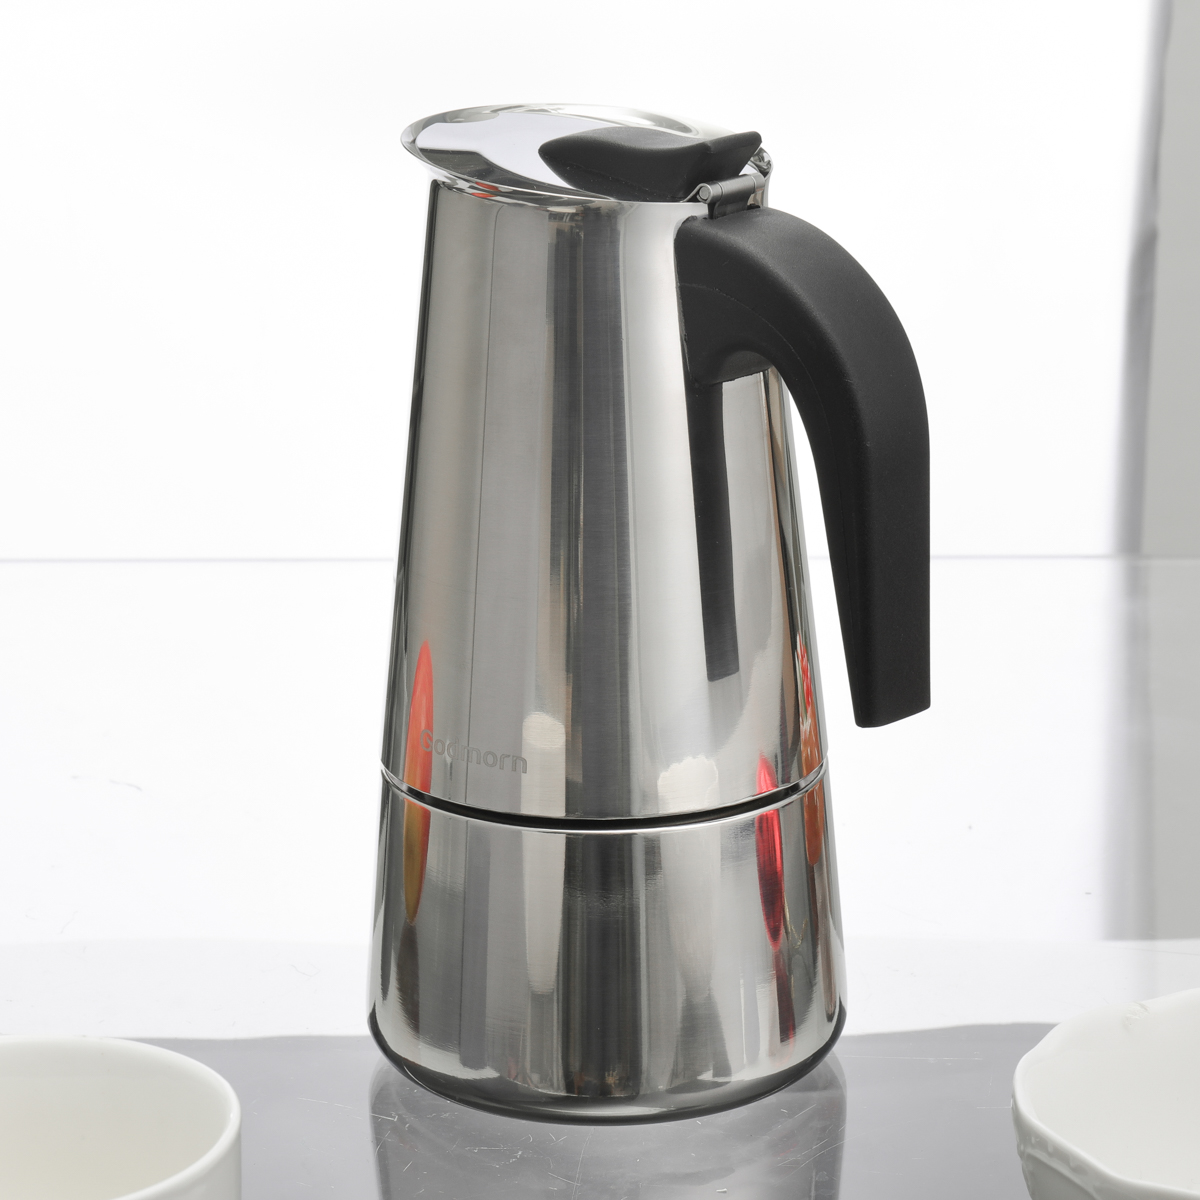 1-Pcs-450ml15oz9-cup-Coffee-Moka-Pot-Stainless-Steel-Removable-Moka-Espresso-Italian-Maker-Stove-Dri-1736605-7